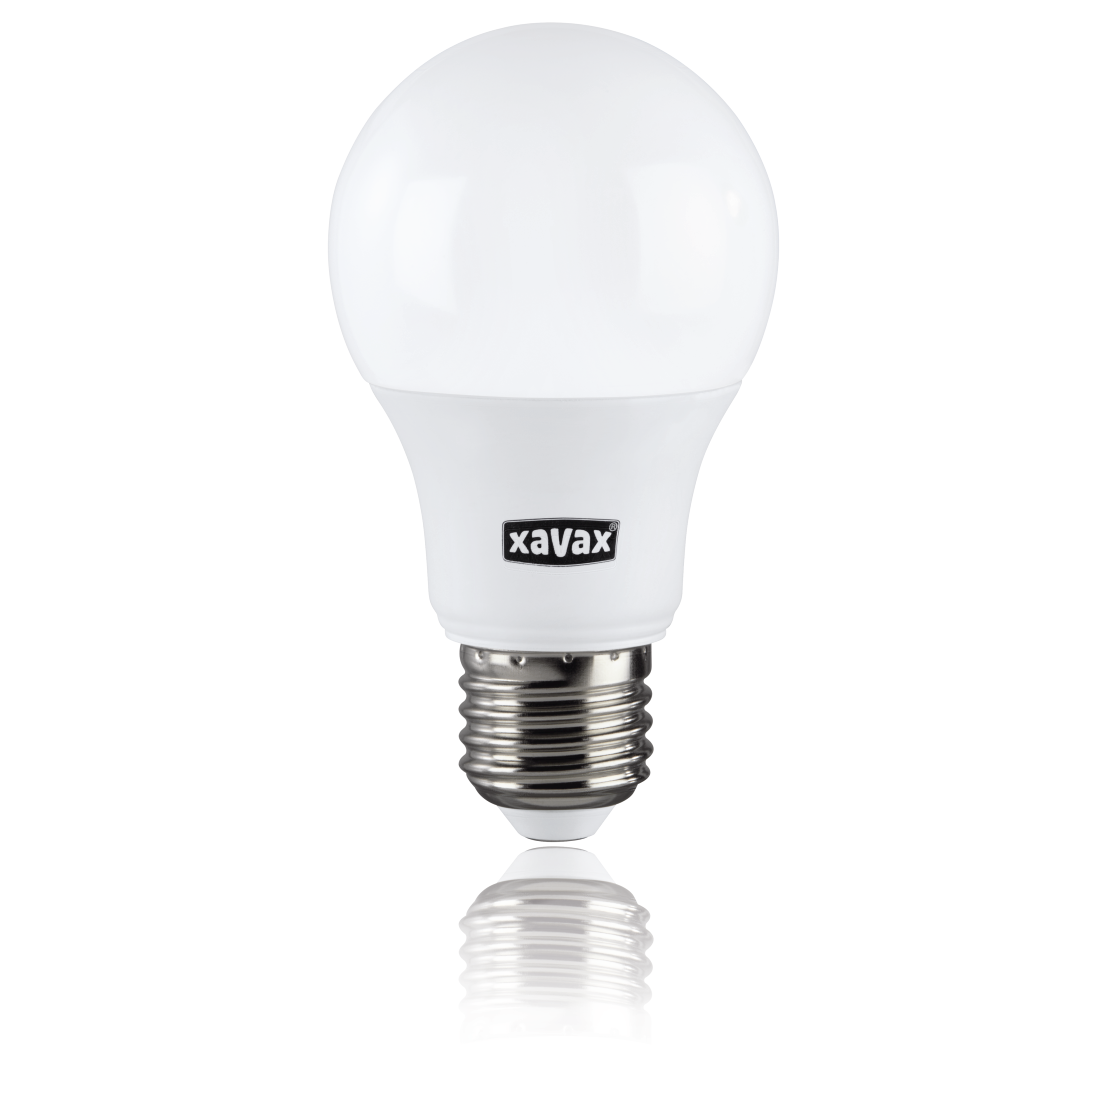 abx2 Druckfähige Abbildung 2 - Xavax, LED-Lampe, E27, 806lm ersetzt 60W, Glühlampe, Warmweiß, dimmbar